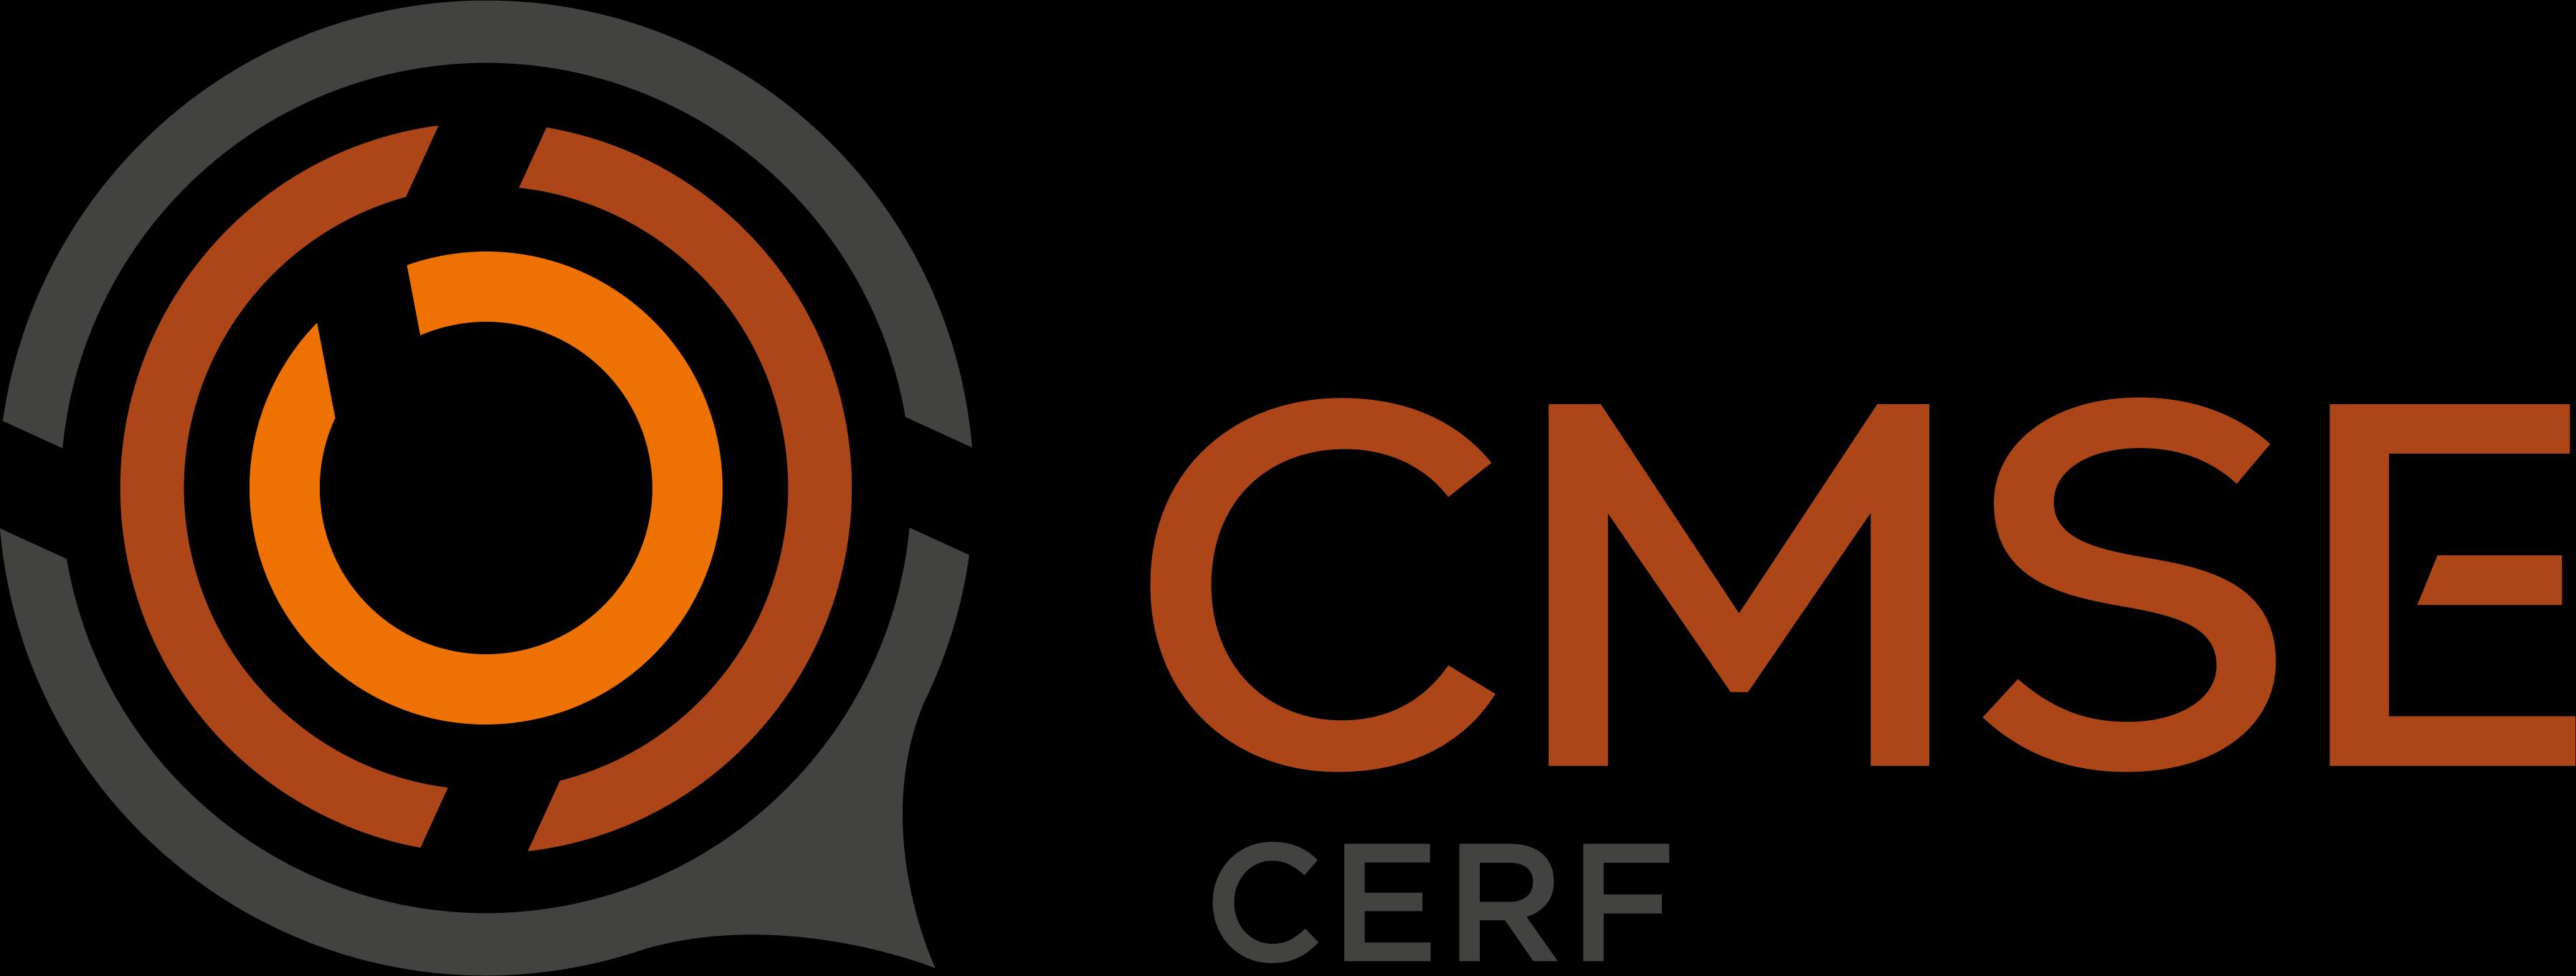 Cmse Cerf - Carrière De Cérilly Cérilly